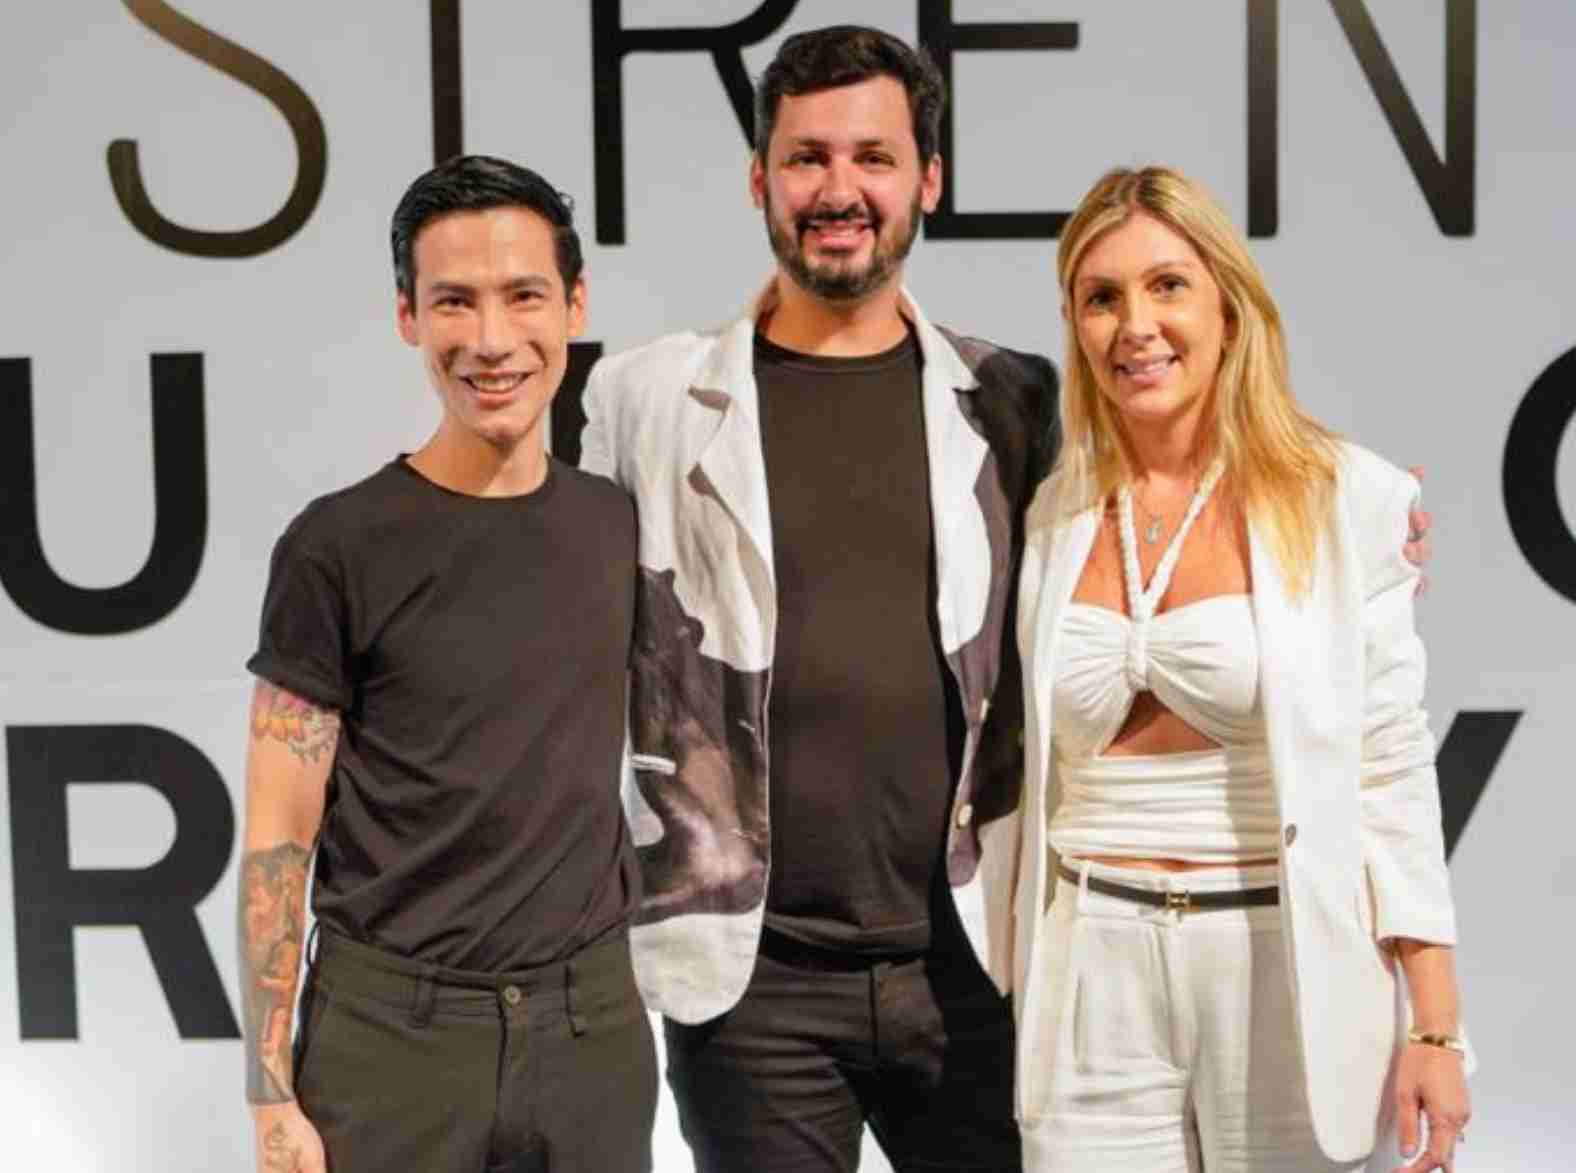 NW Group reúne as marcas La Sirene, Yukio e Armory para tarde de moda em DF